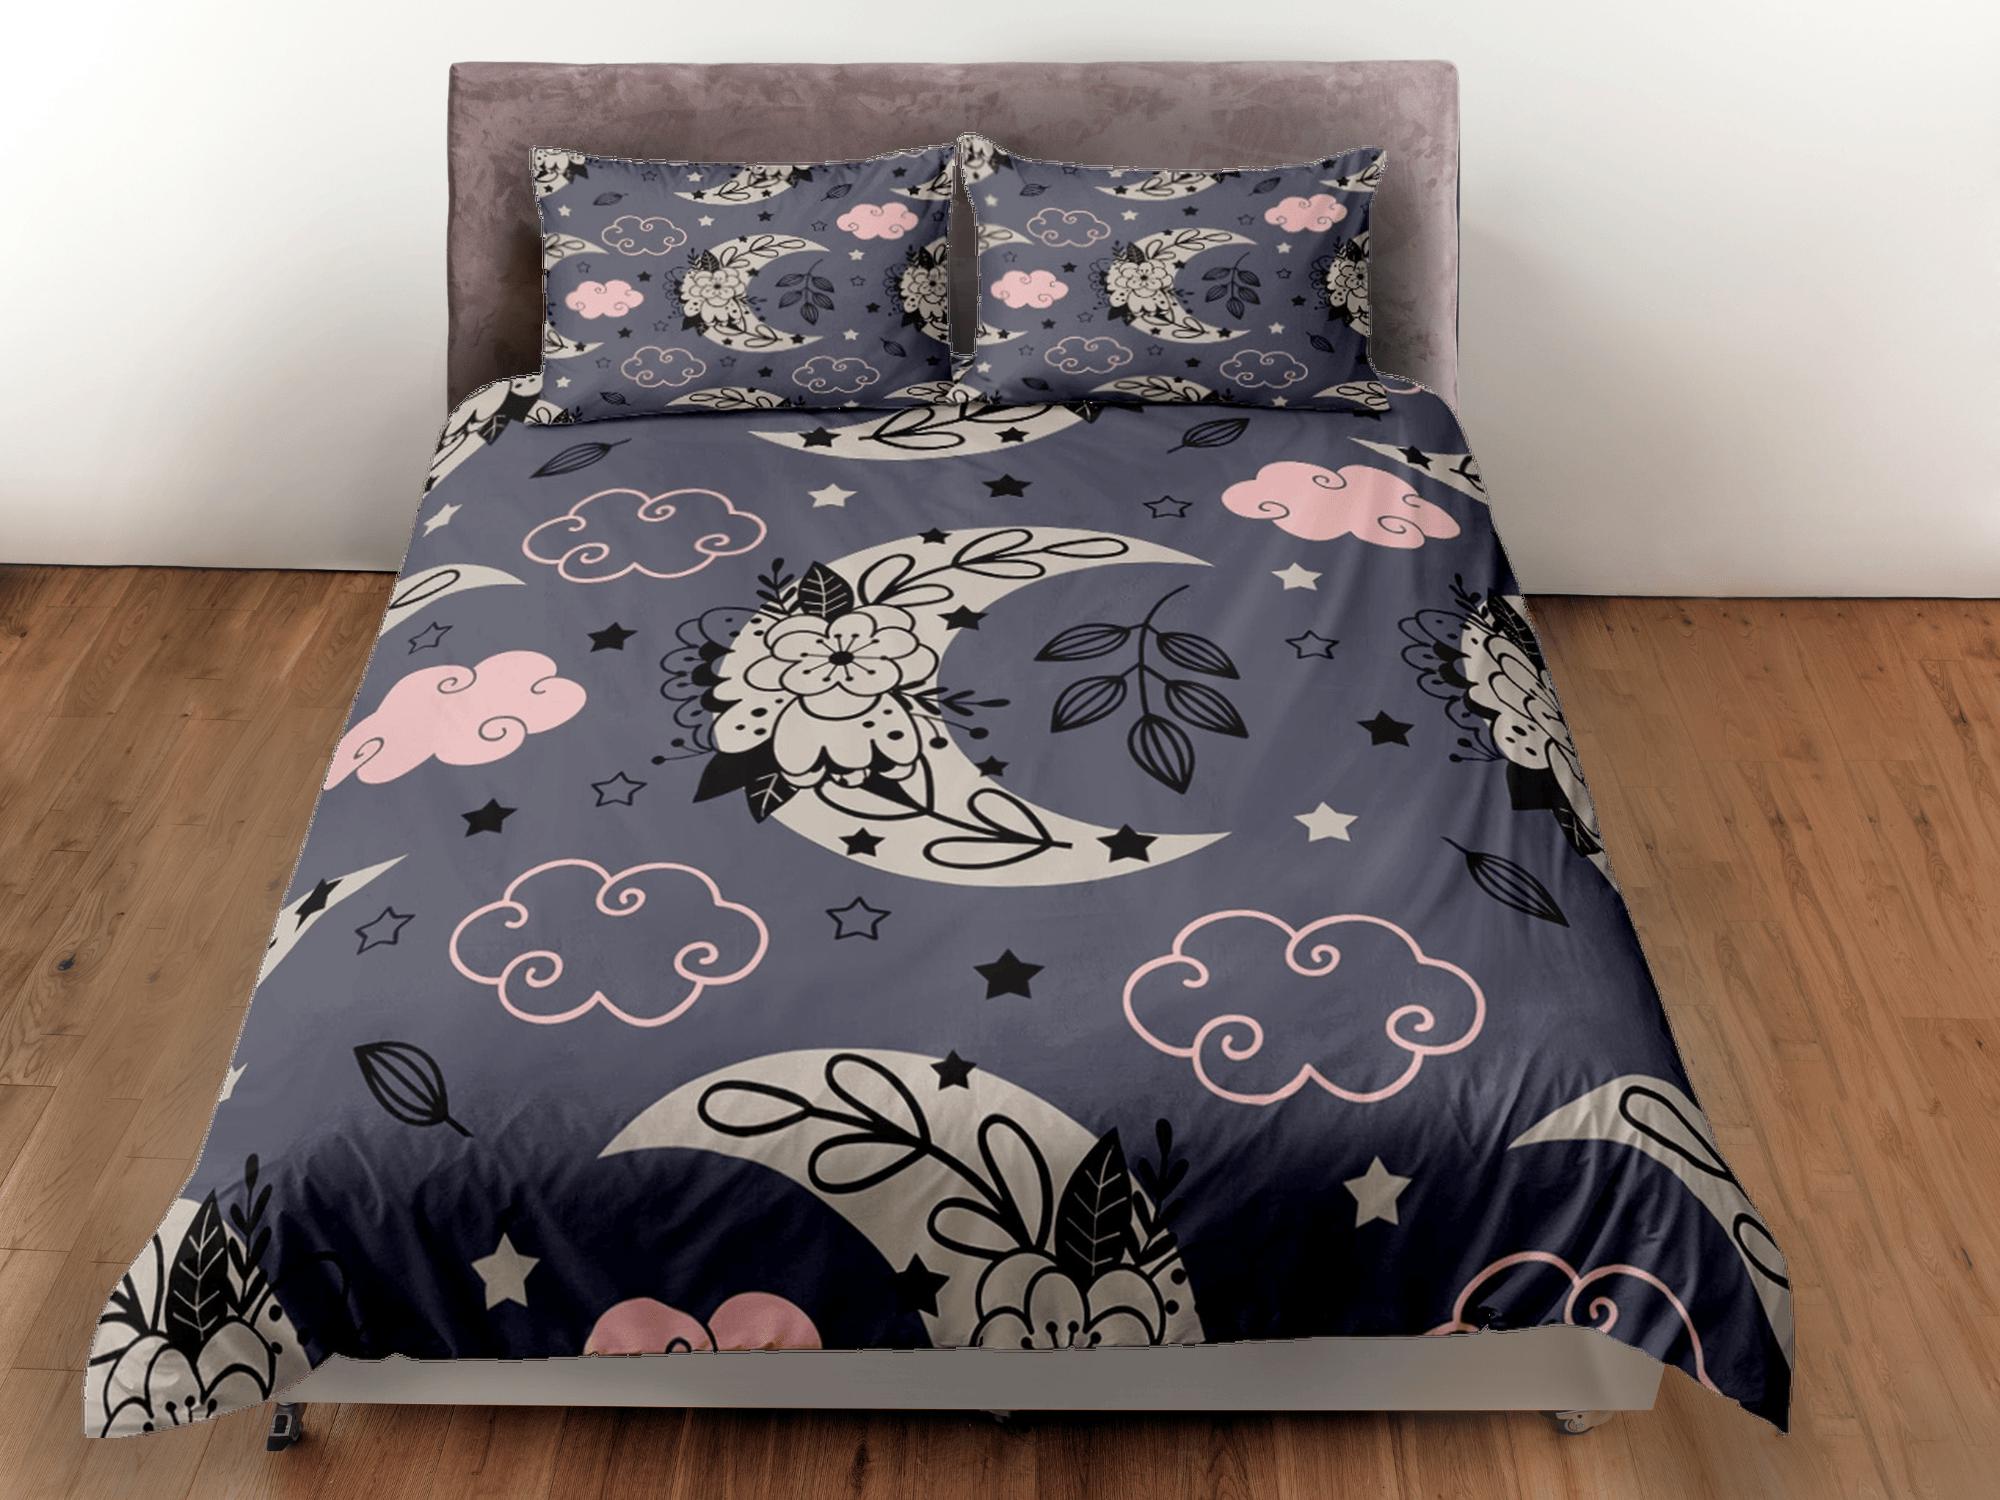 daintyduvet Celestial bedding purple grey, witchy decor dorm bedding, aesthetic duvet, boho bedding set full king queen, astrology gifts, gothic art